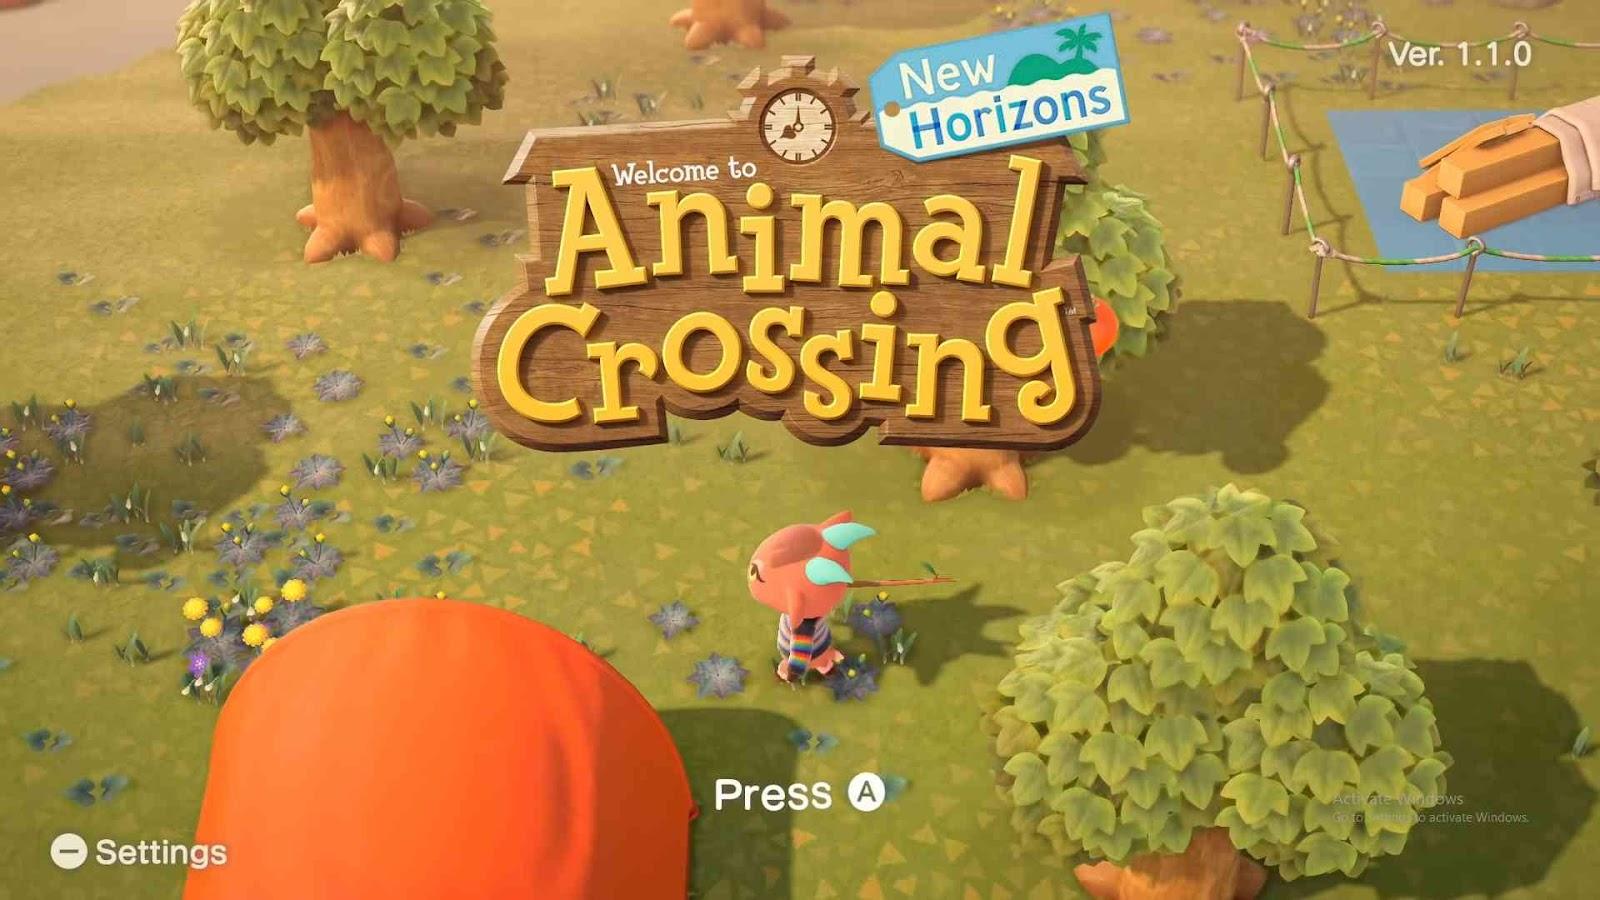 1.Animal Crossing: New Horizons